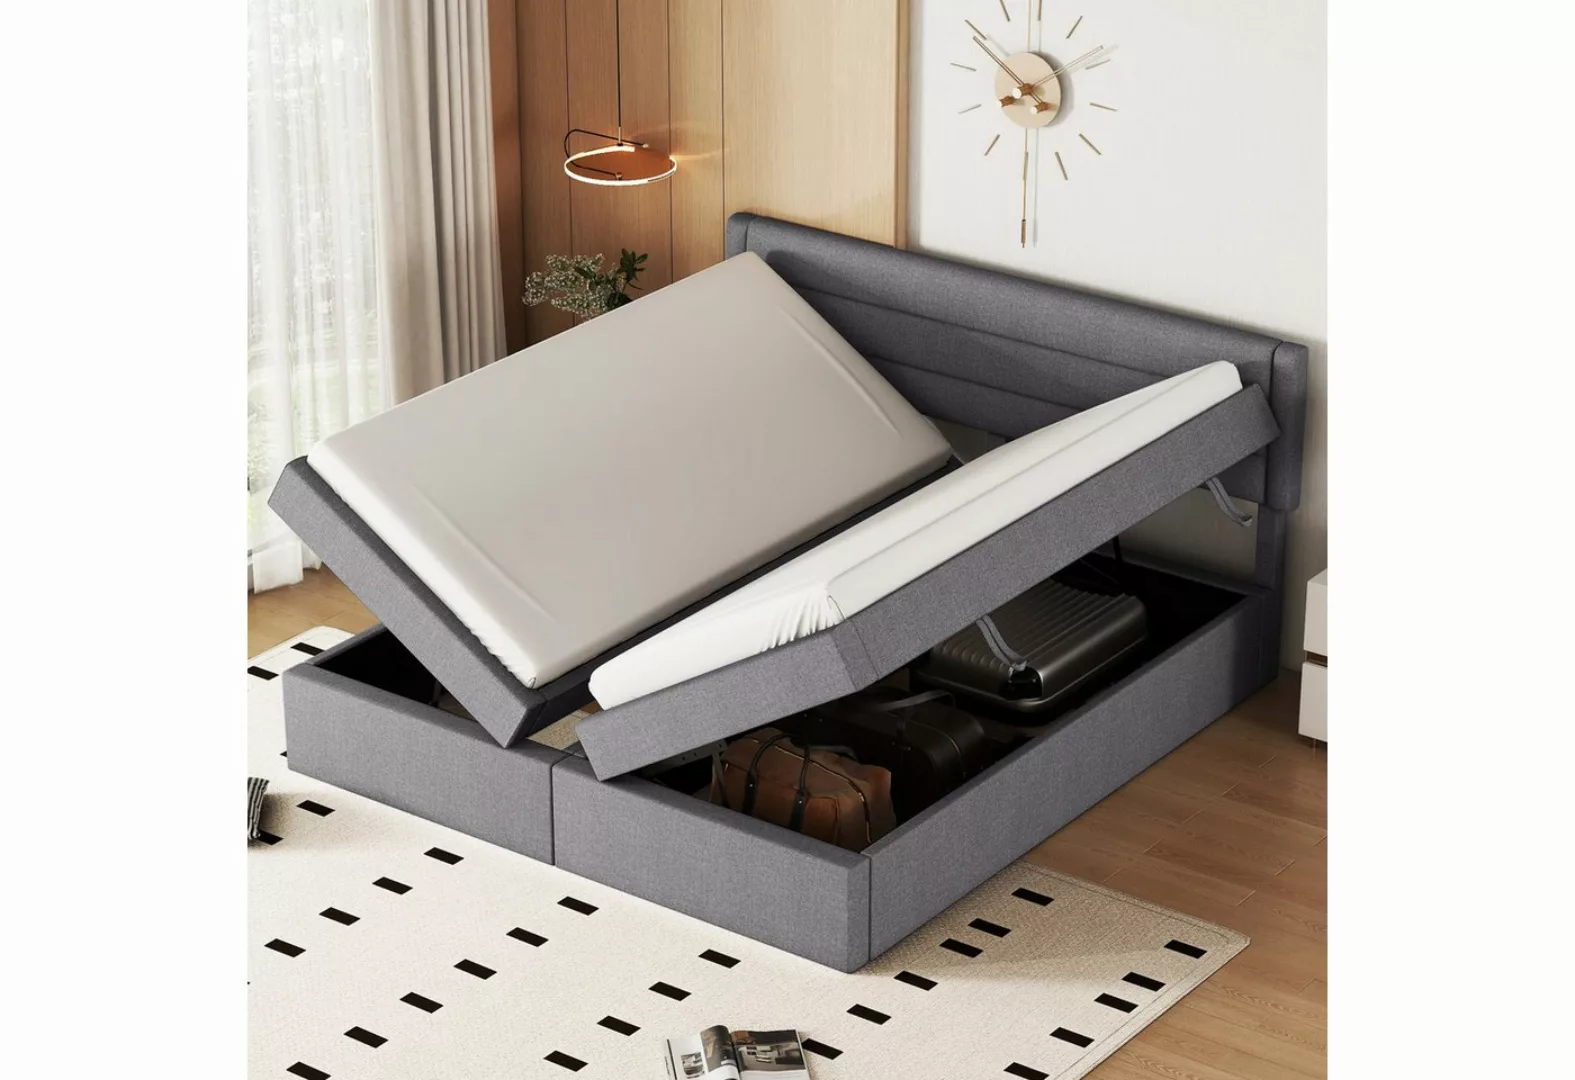 Ulife Polsterbett Doppelbett Flaches Bett großer Stauraum 180*200cm, Bett k günstig online kaufen